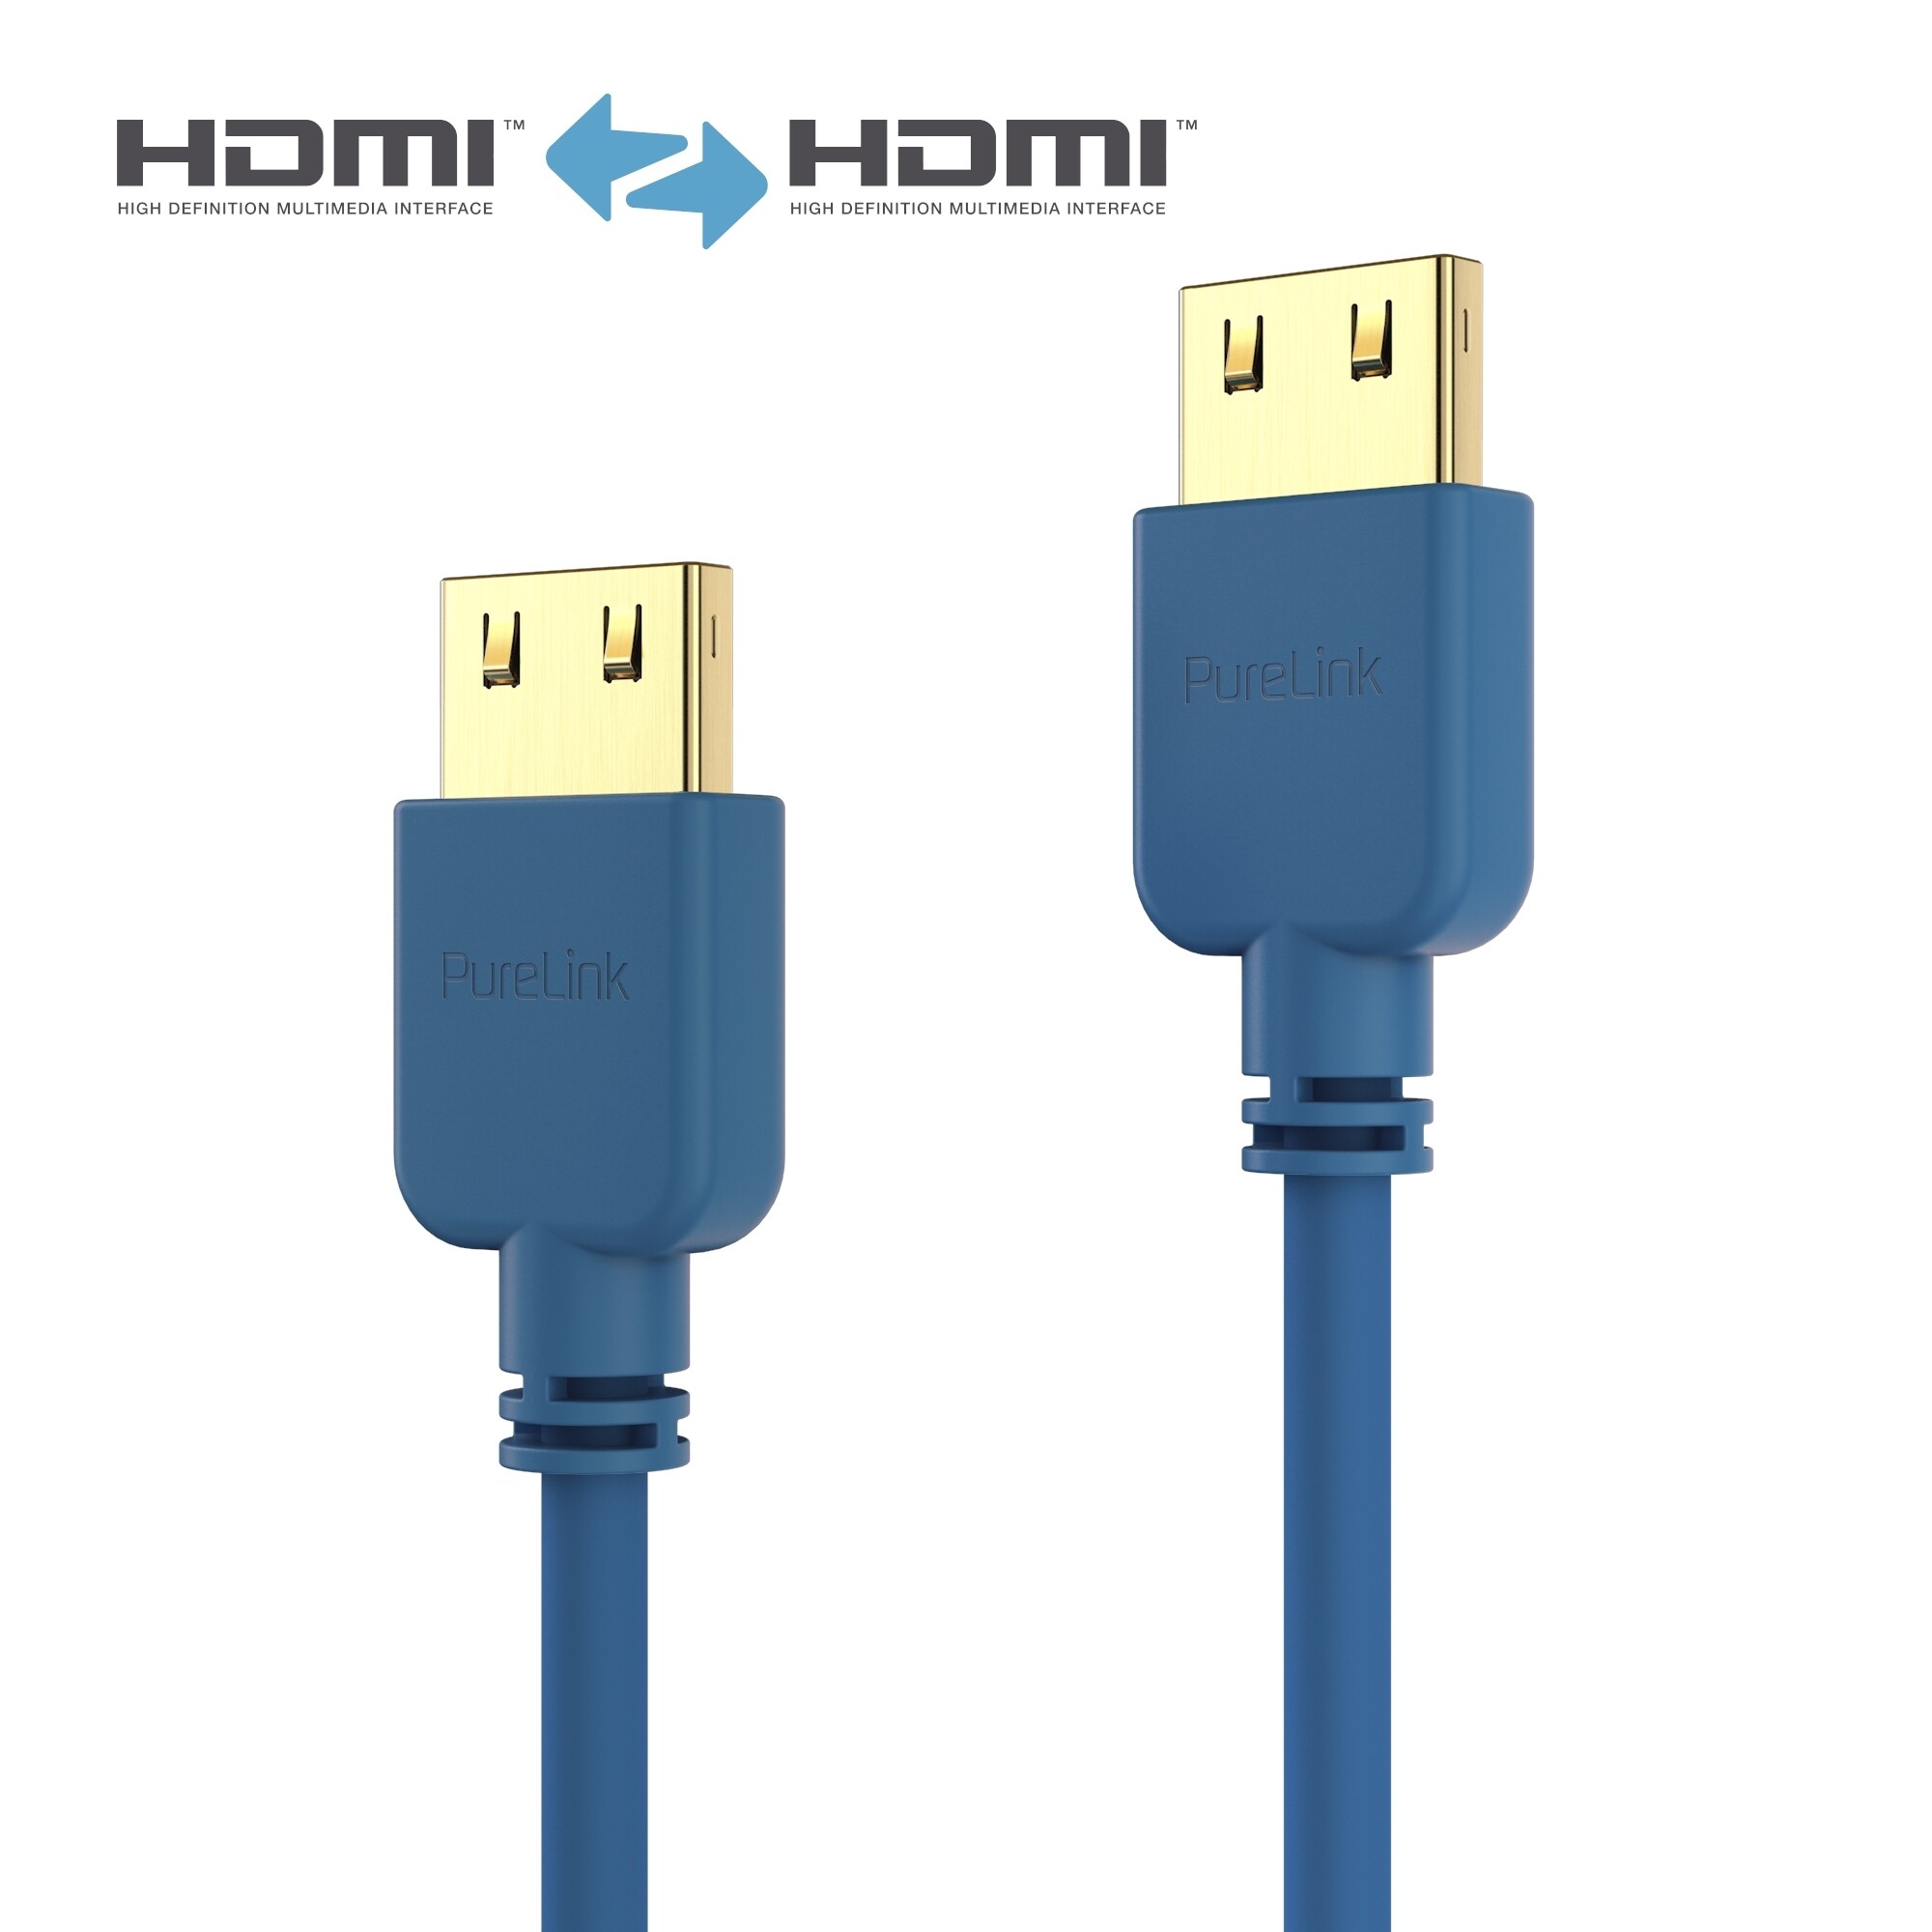 Purelink-PI0502-020-HDMI-Kabel-SuperThin-2m-blau